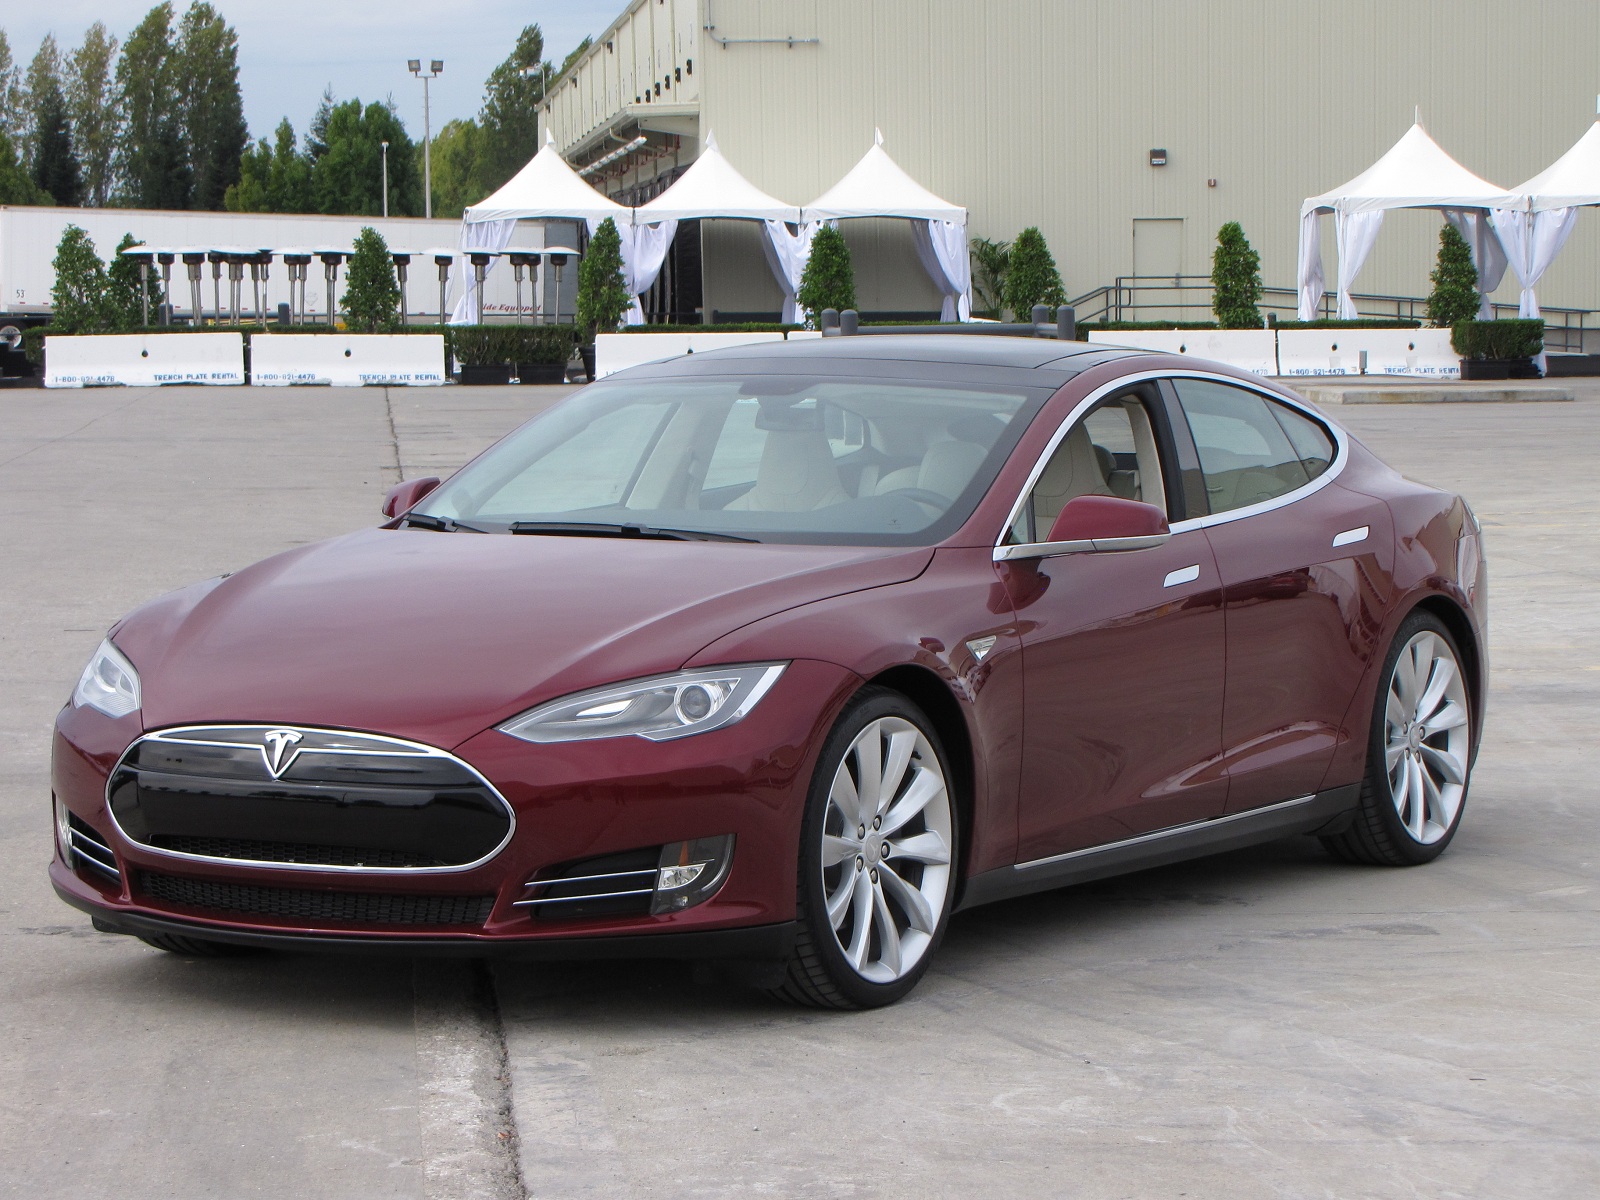 2012 Tesla Model S: EPA Range Of 265 Miles, 89 MPGe Efficiency